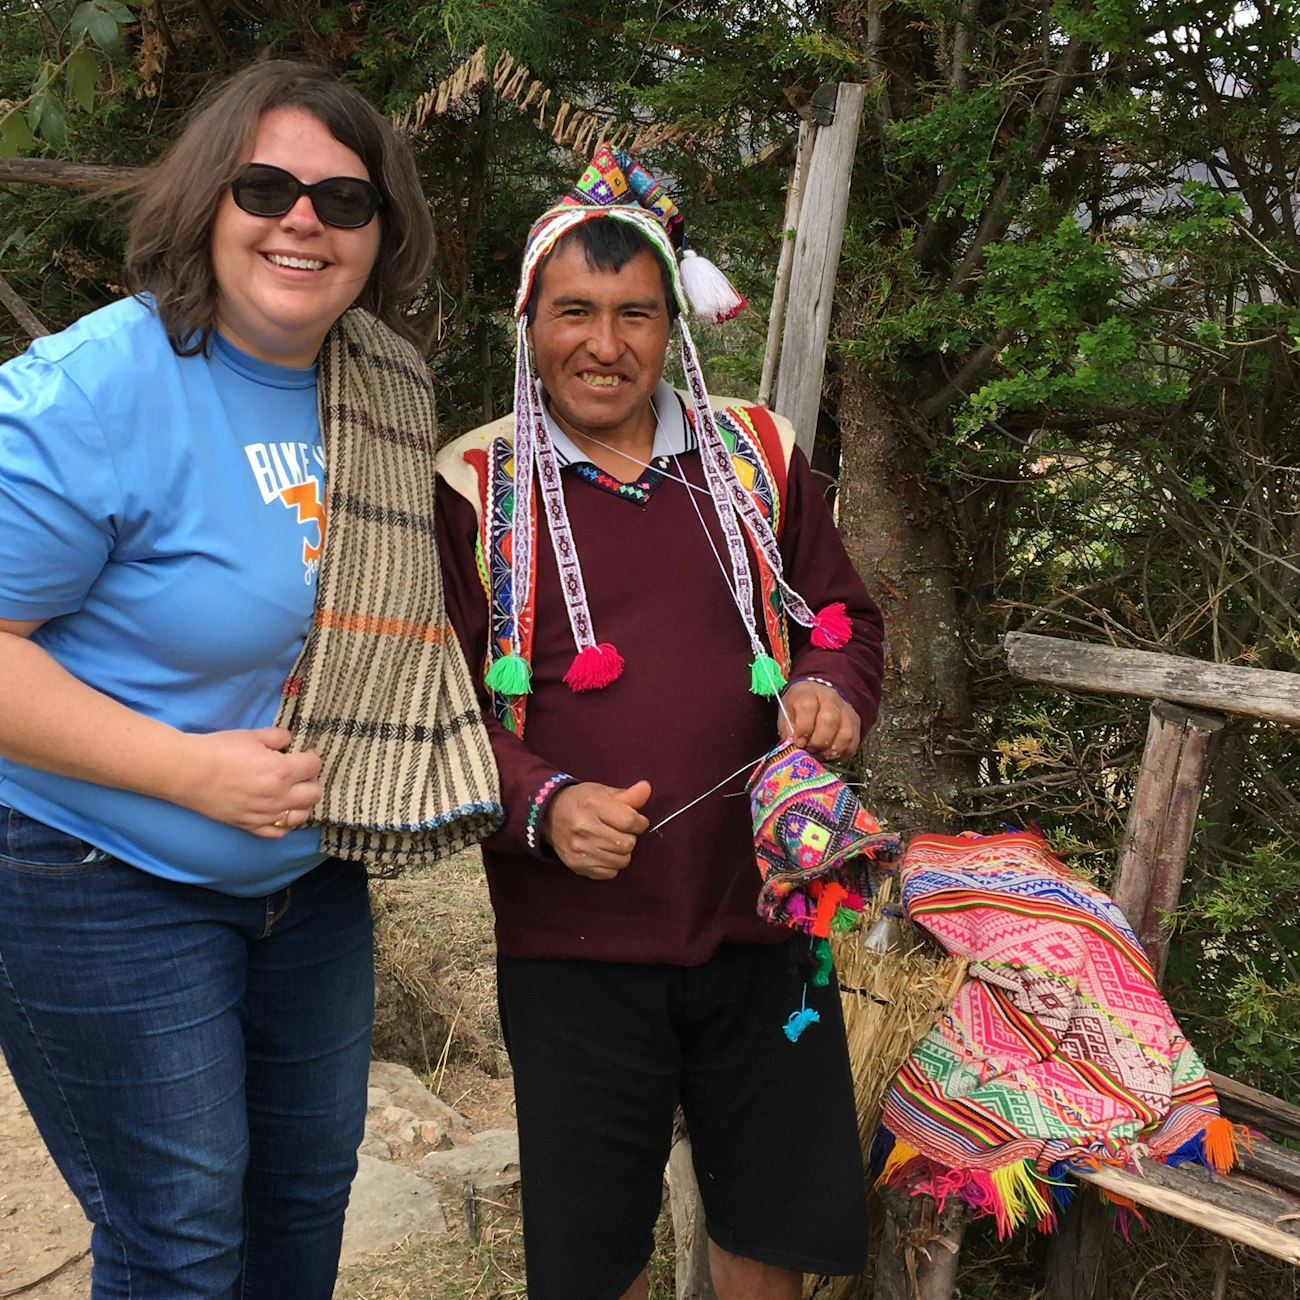 White woman standing next to Peruvian man, holding knitting and wearing chullo hat